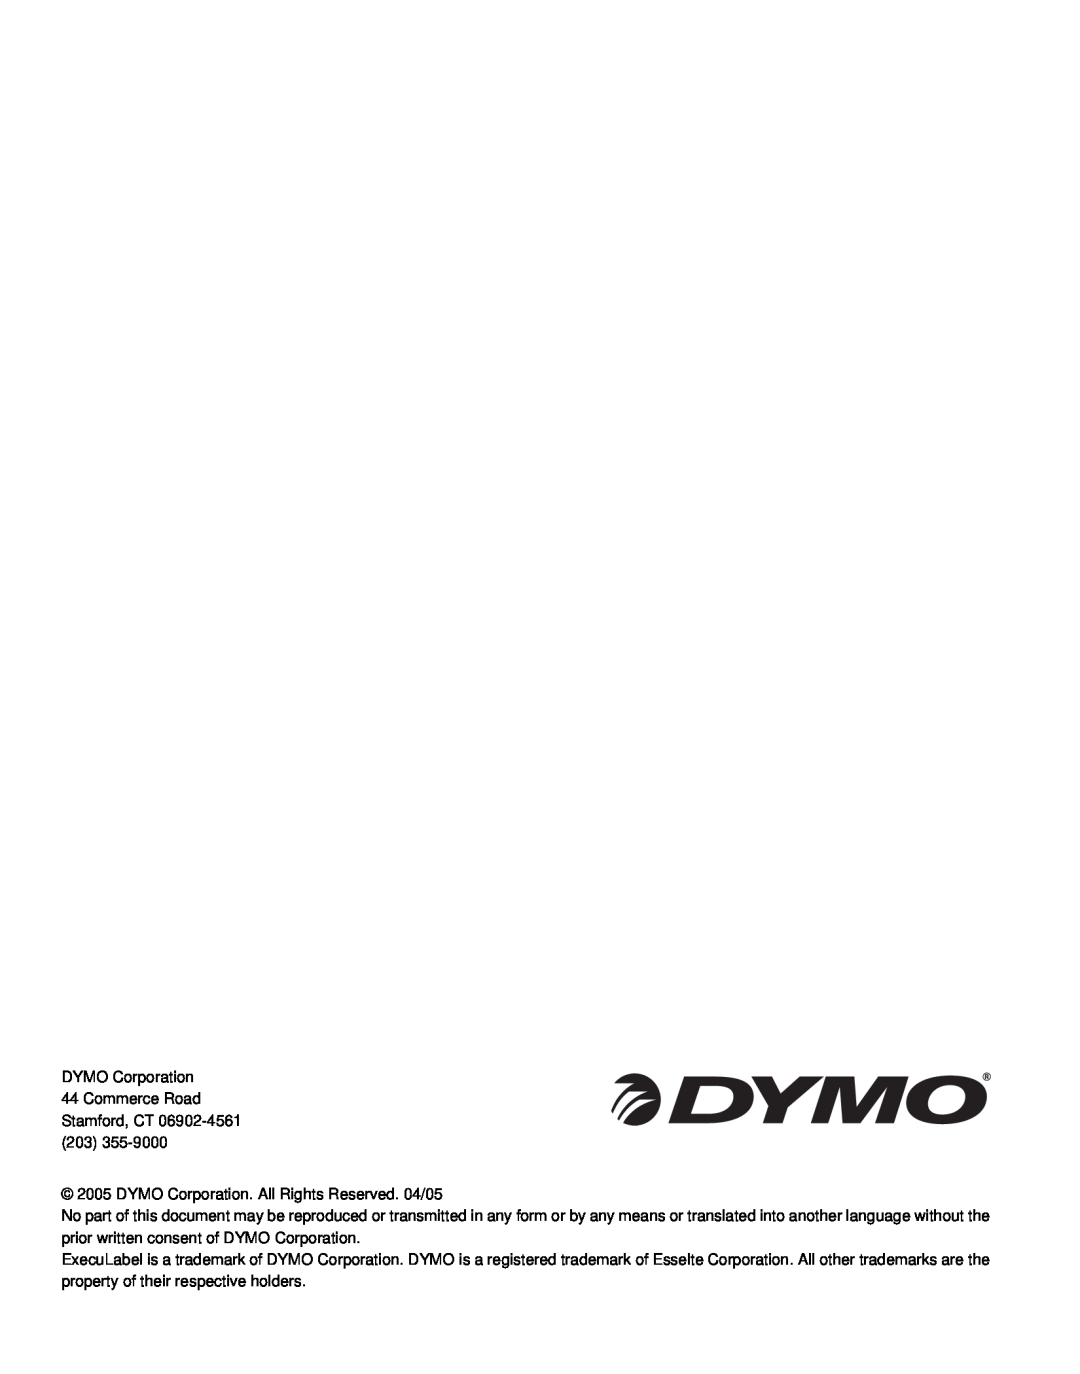 Dymo LM450 manual DYMO Corporation 